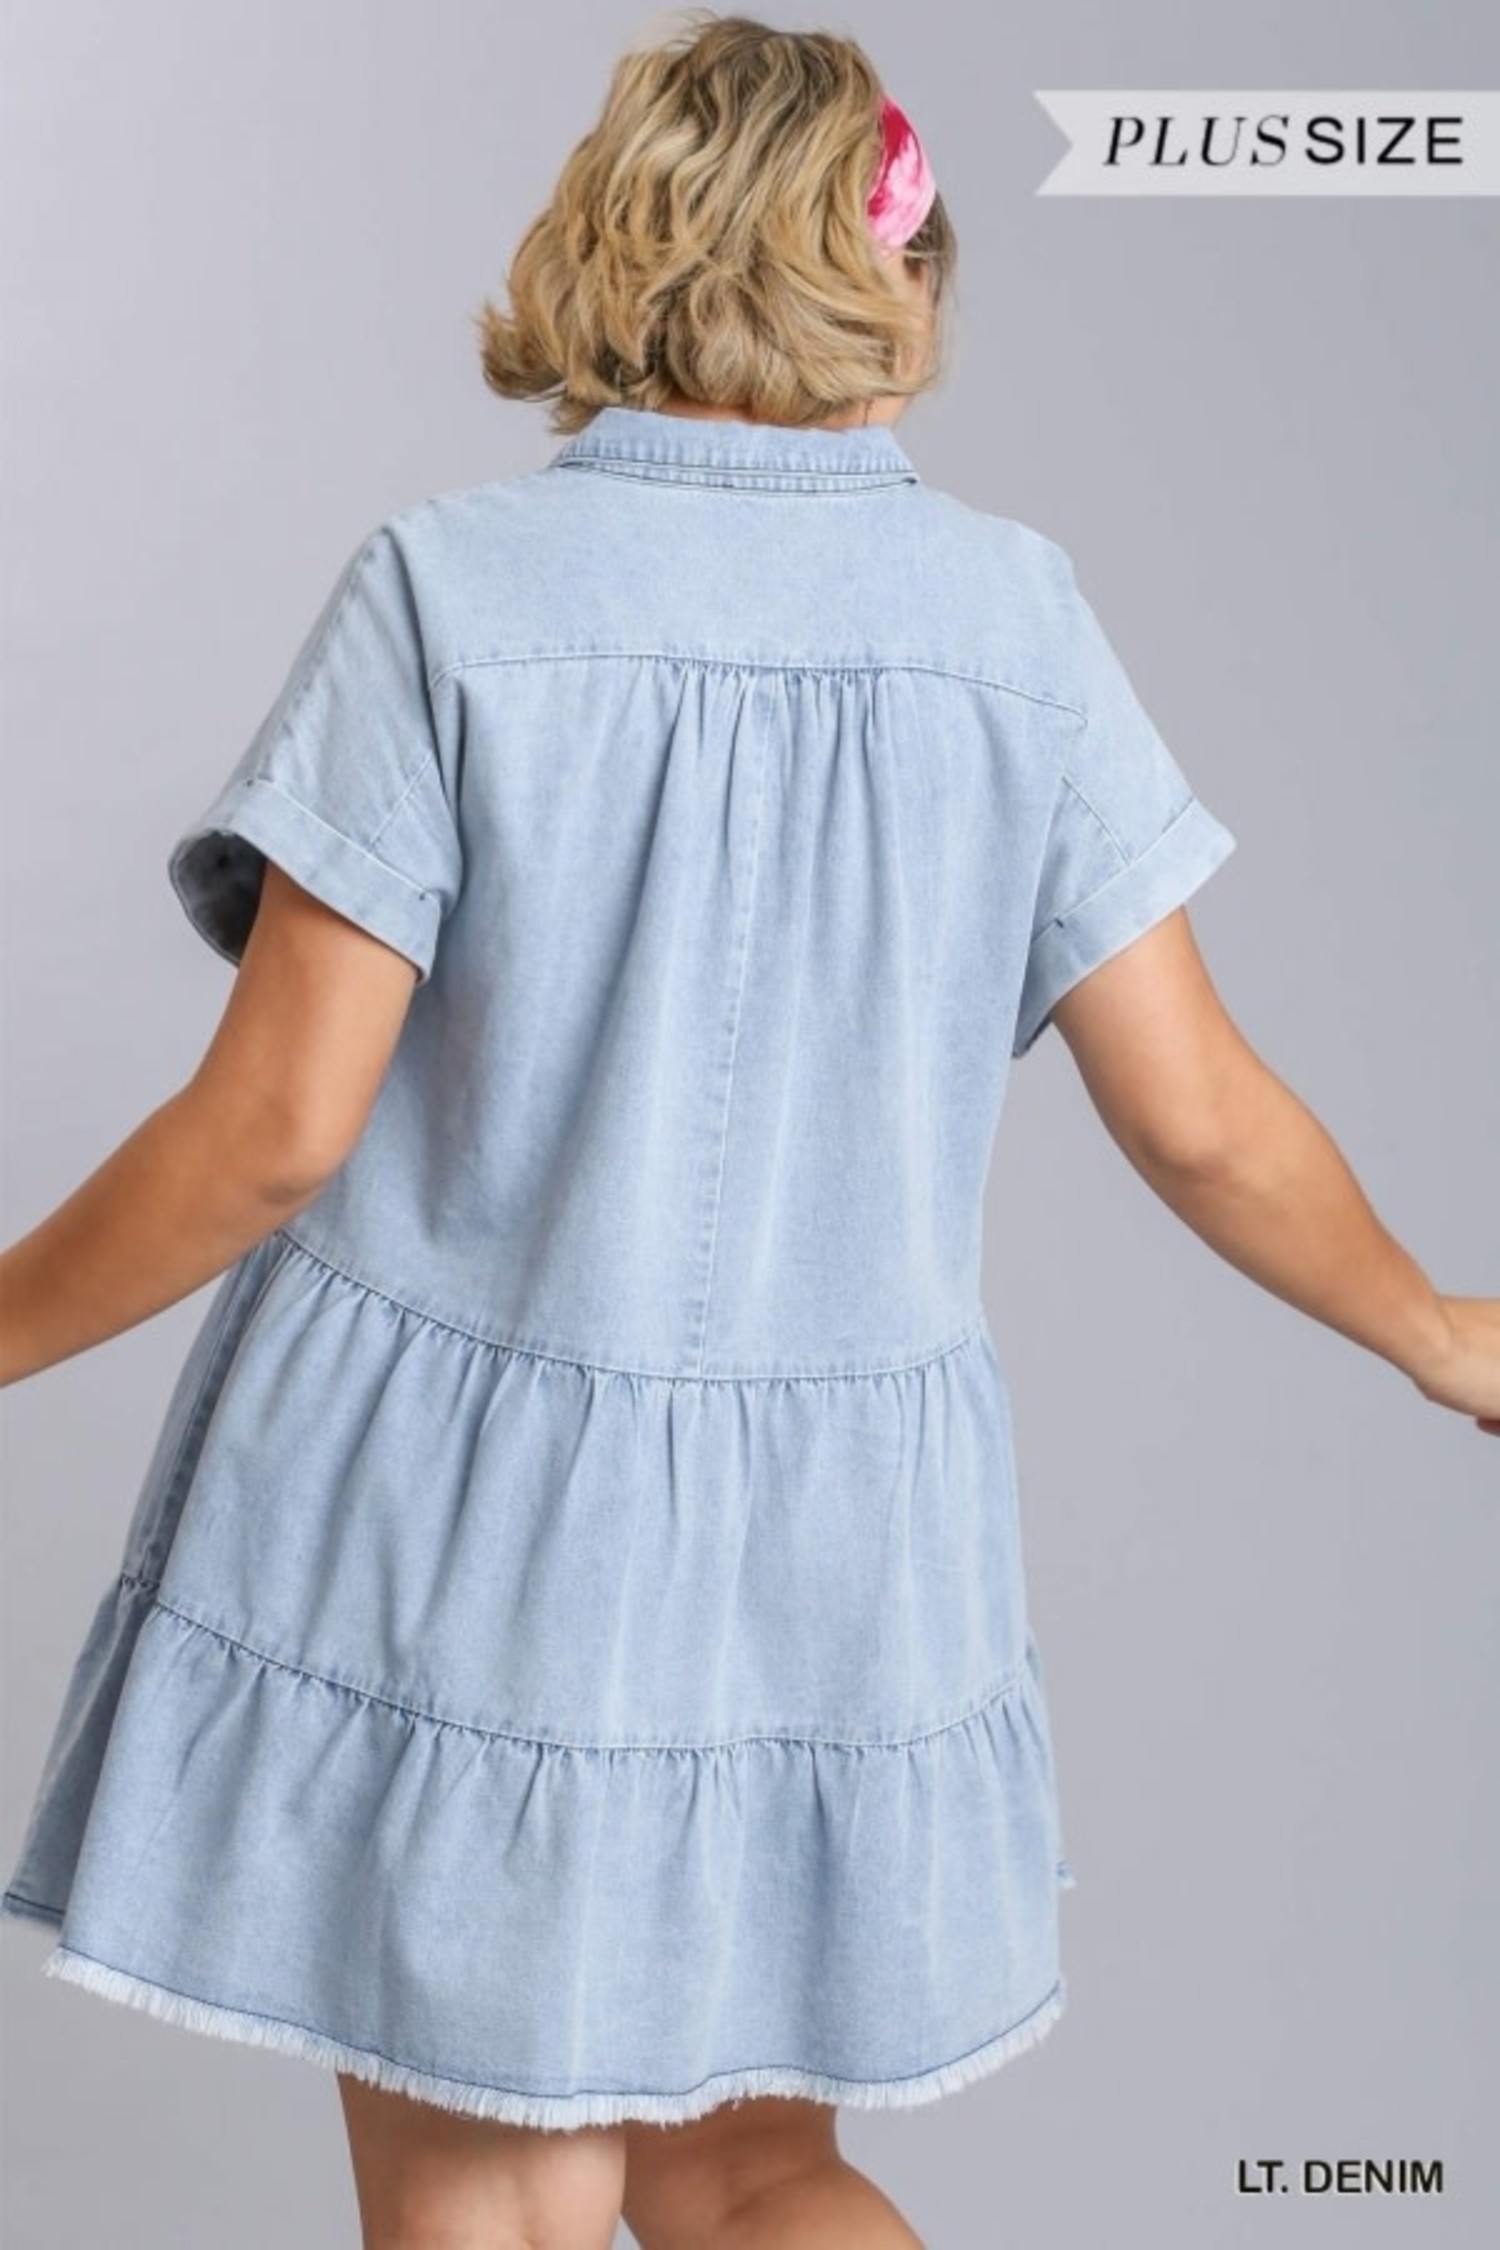 Umgee Powder Blue Pinstripe Frayed Ruffle Dress - Women's - Size S